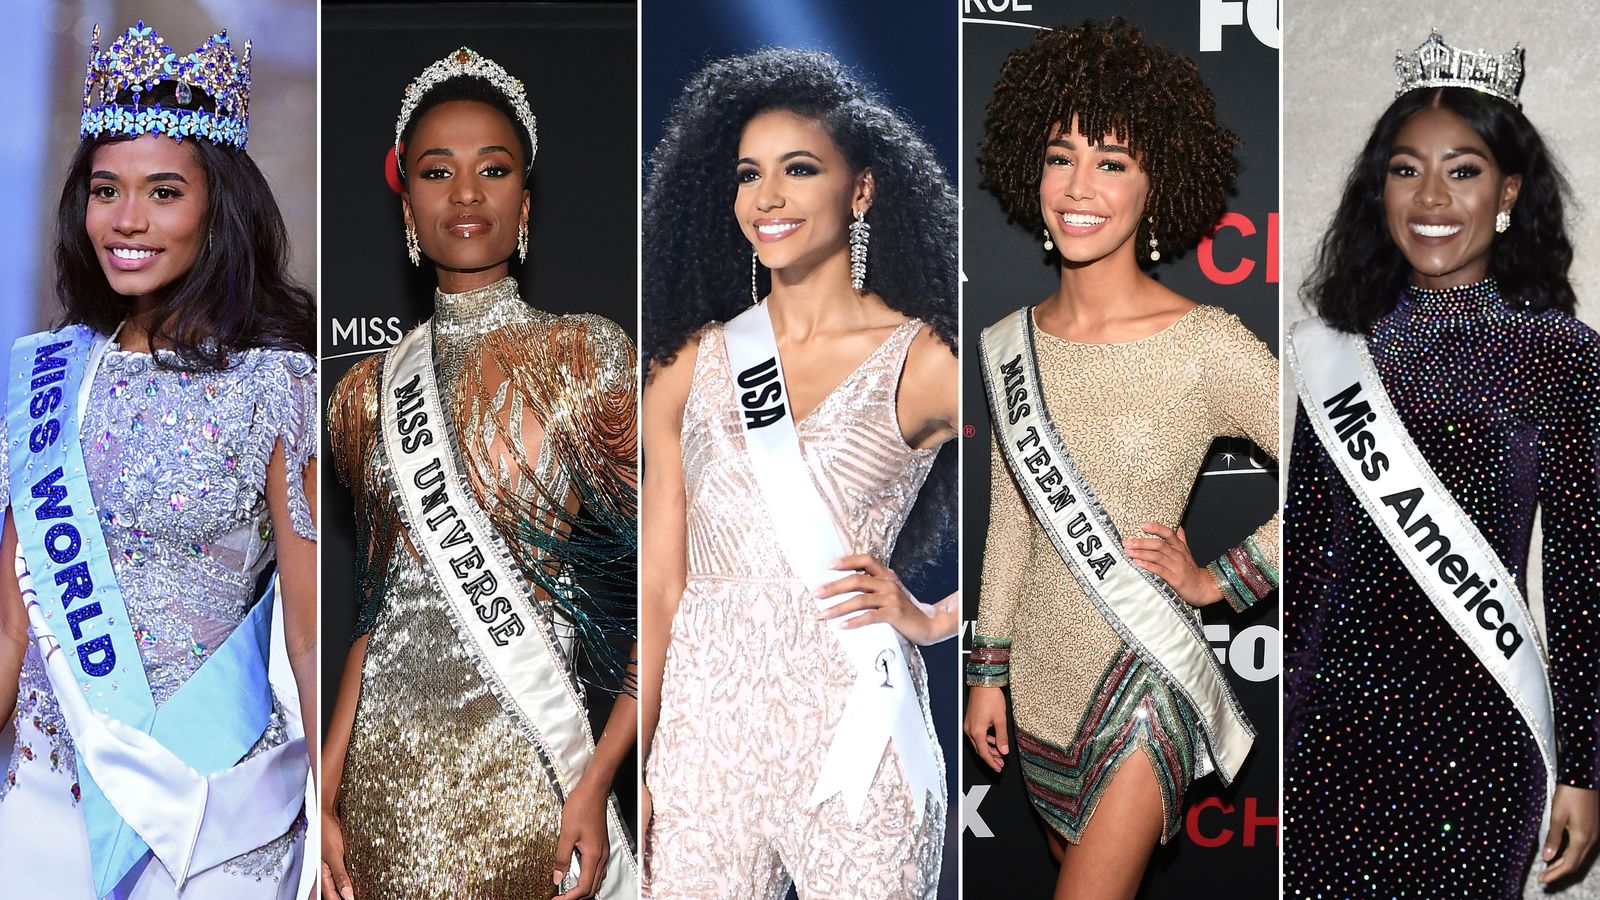 https://media.cnn.com/api/v1/images/stellar/prod/191214181108-updated-black-beauty-pageant-winner-split.jpg?q=w_1600,h_900,x_0,y_0,c_fill